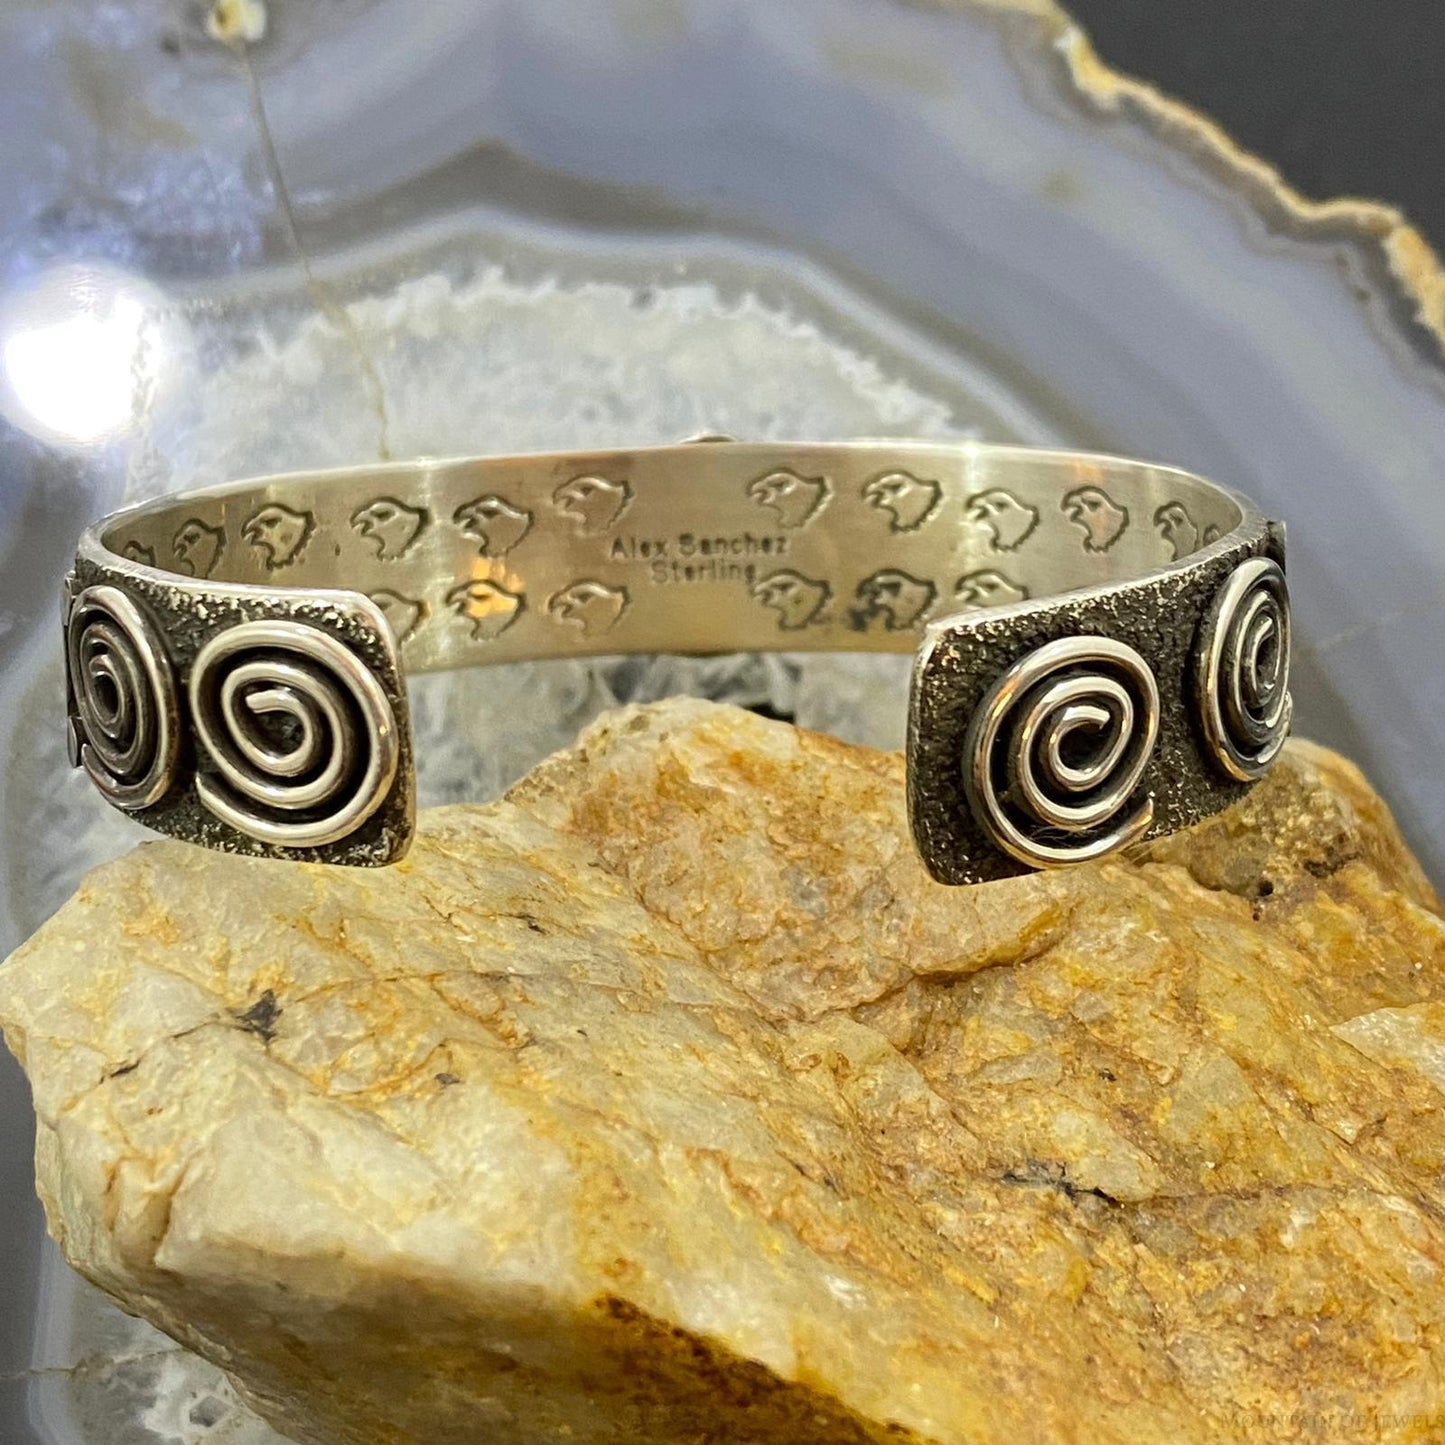 Alex Sanchez Native American Sterling Silver Turquoise Petroglyph Bracelet #1 - Mountain Of Jewels